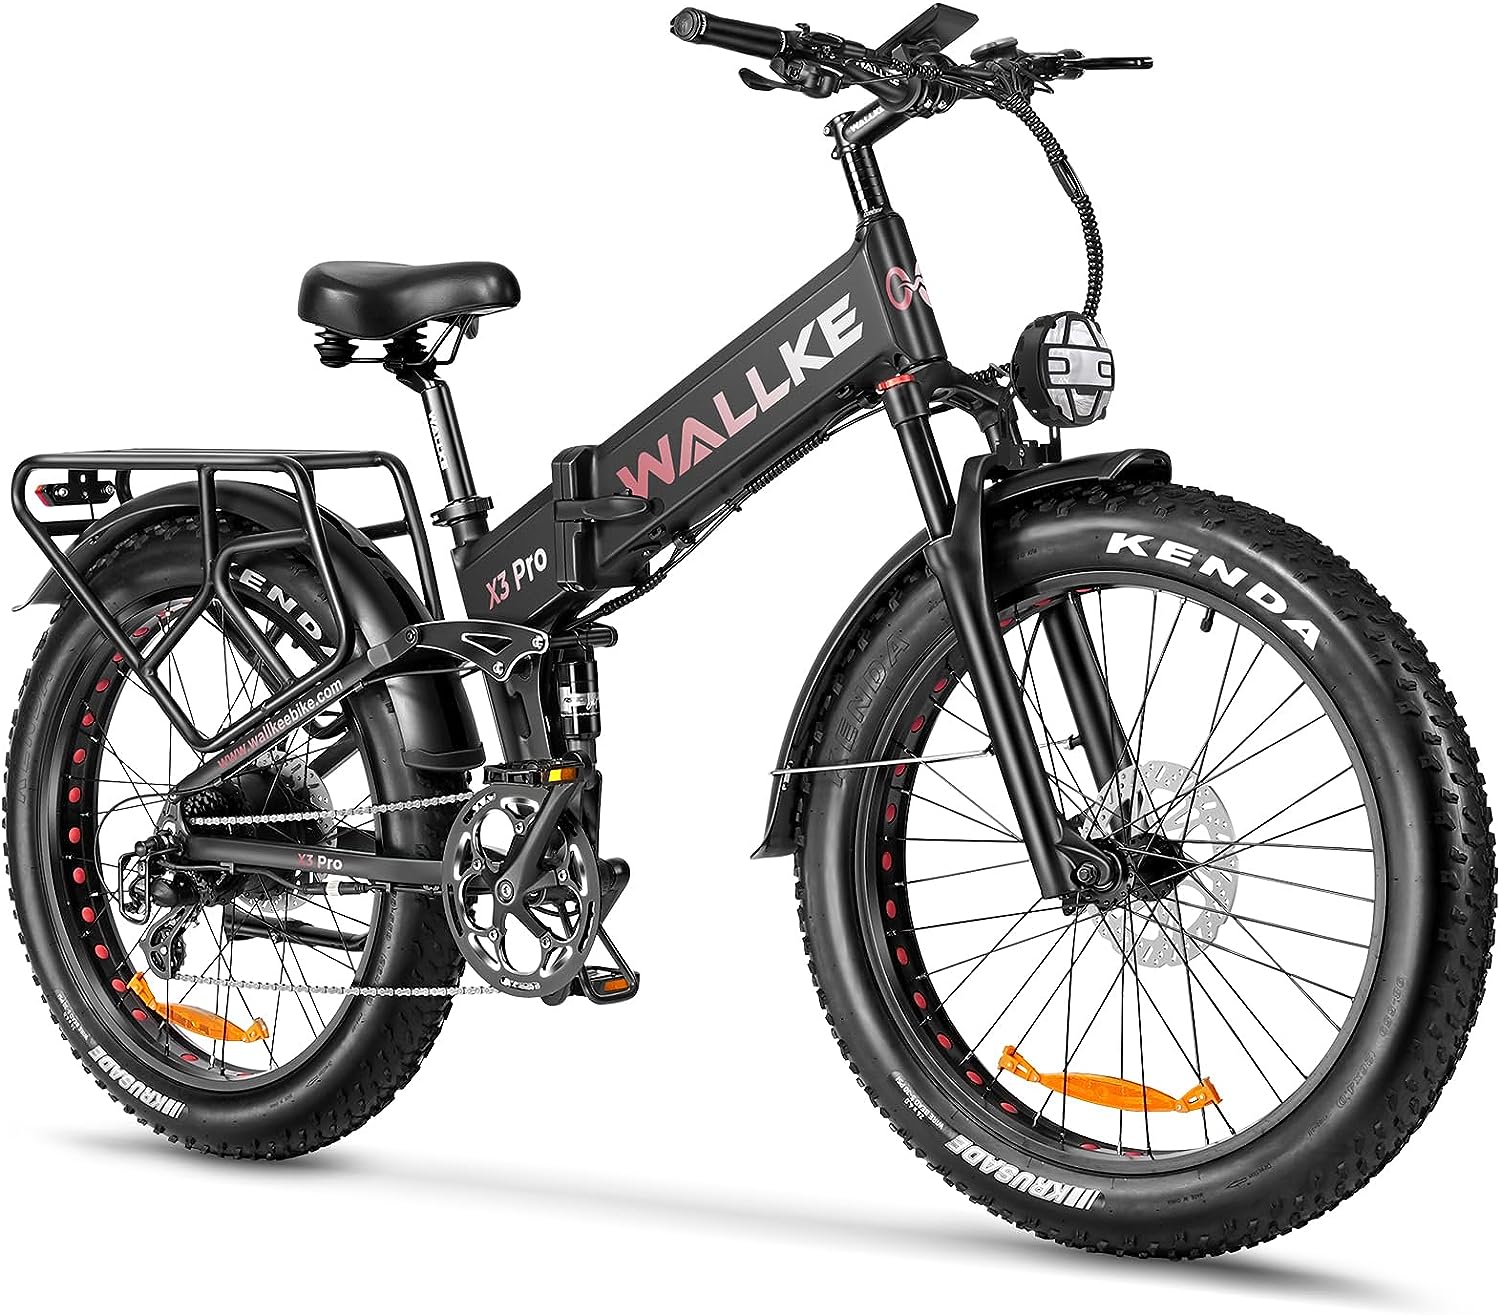 Wallke X3 Pro Electric Bike